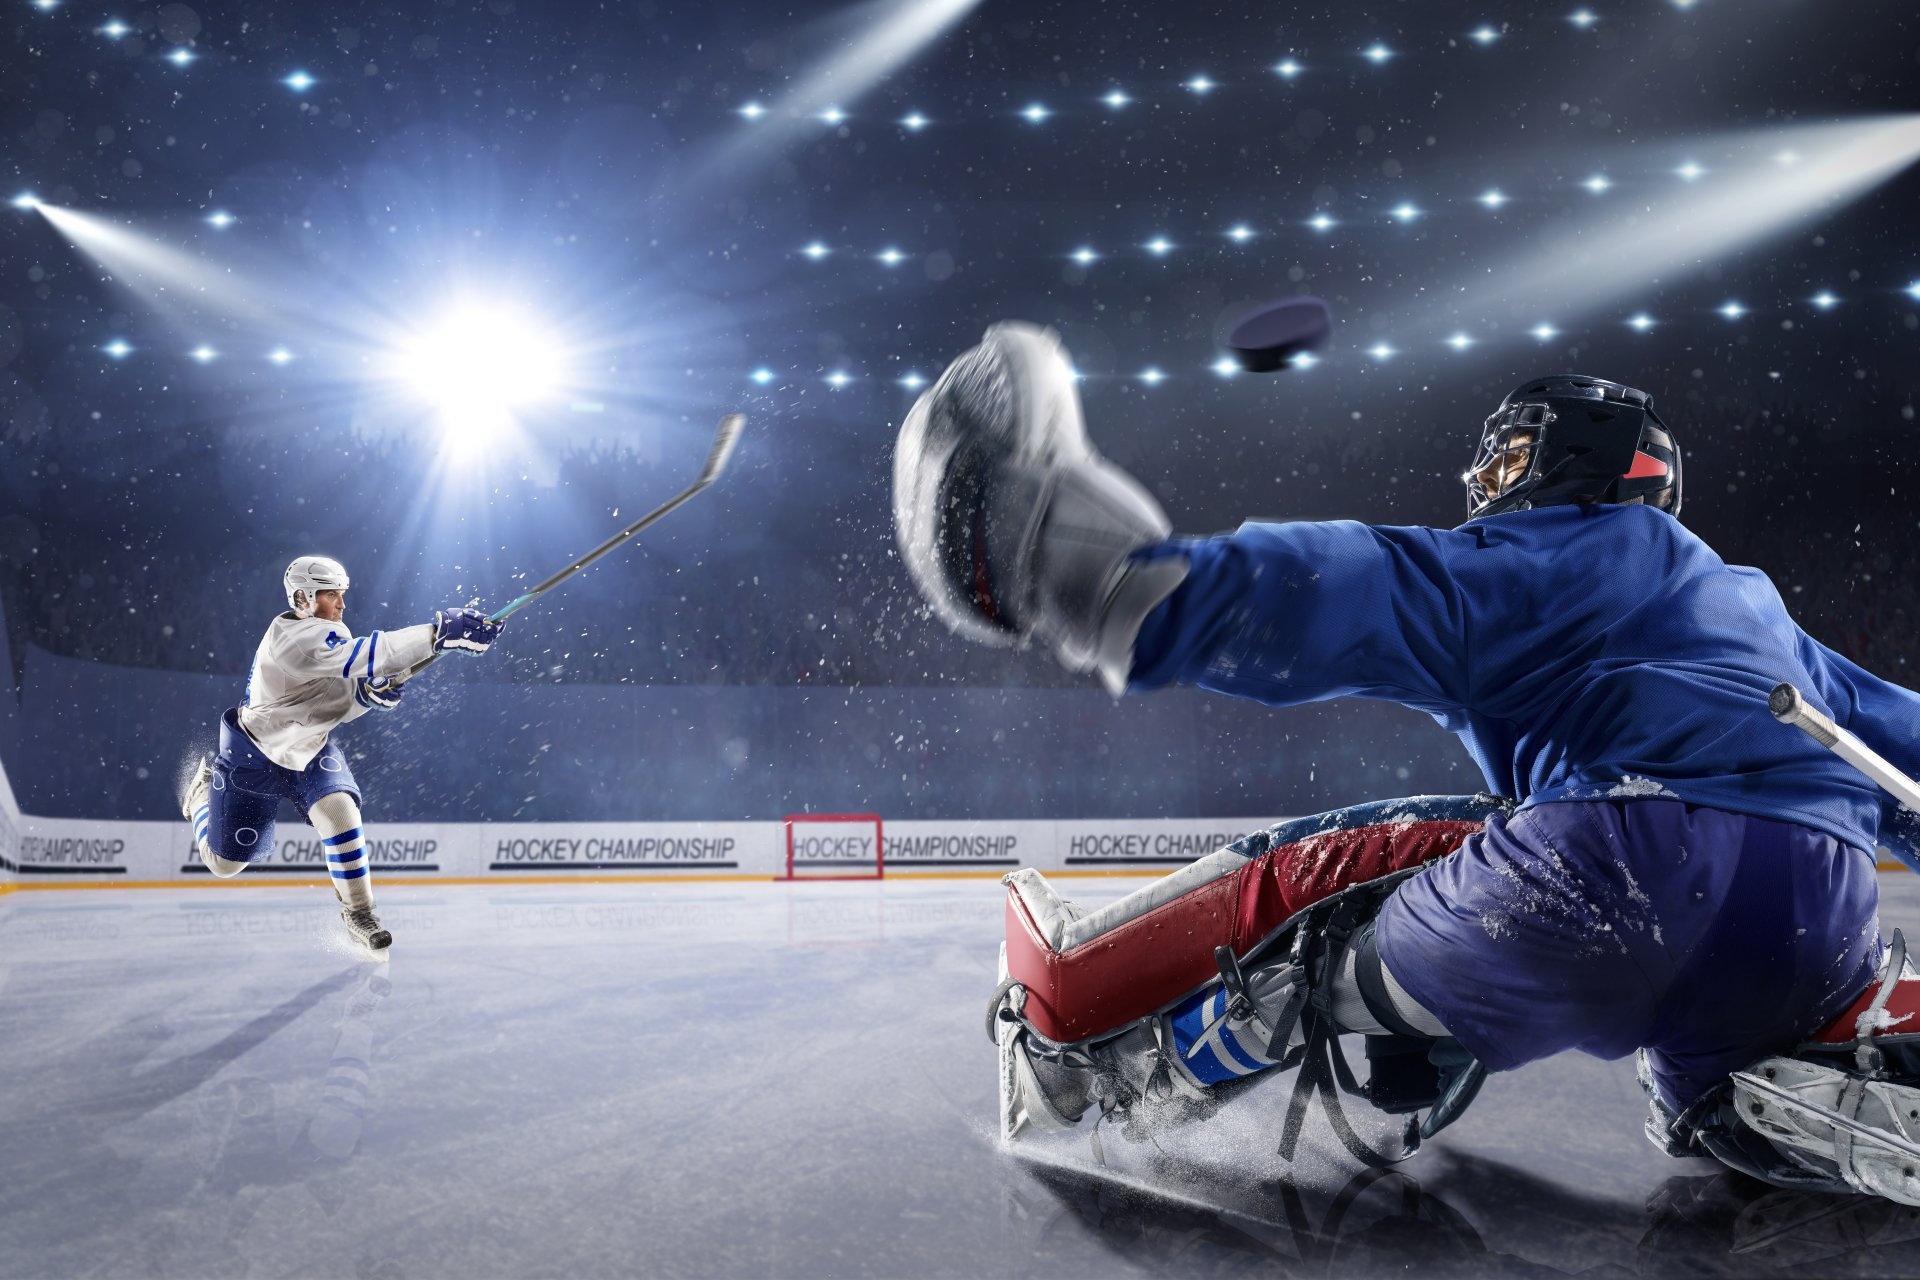 Ice hockey wallpaper, Powerful hockey player, Fierce game face, Lightning reflexes, 1920x1280 HD Desktop